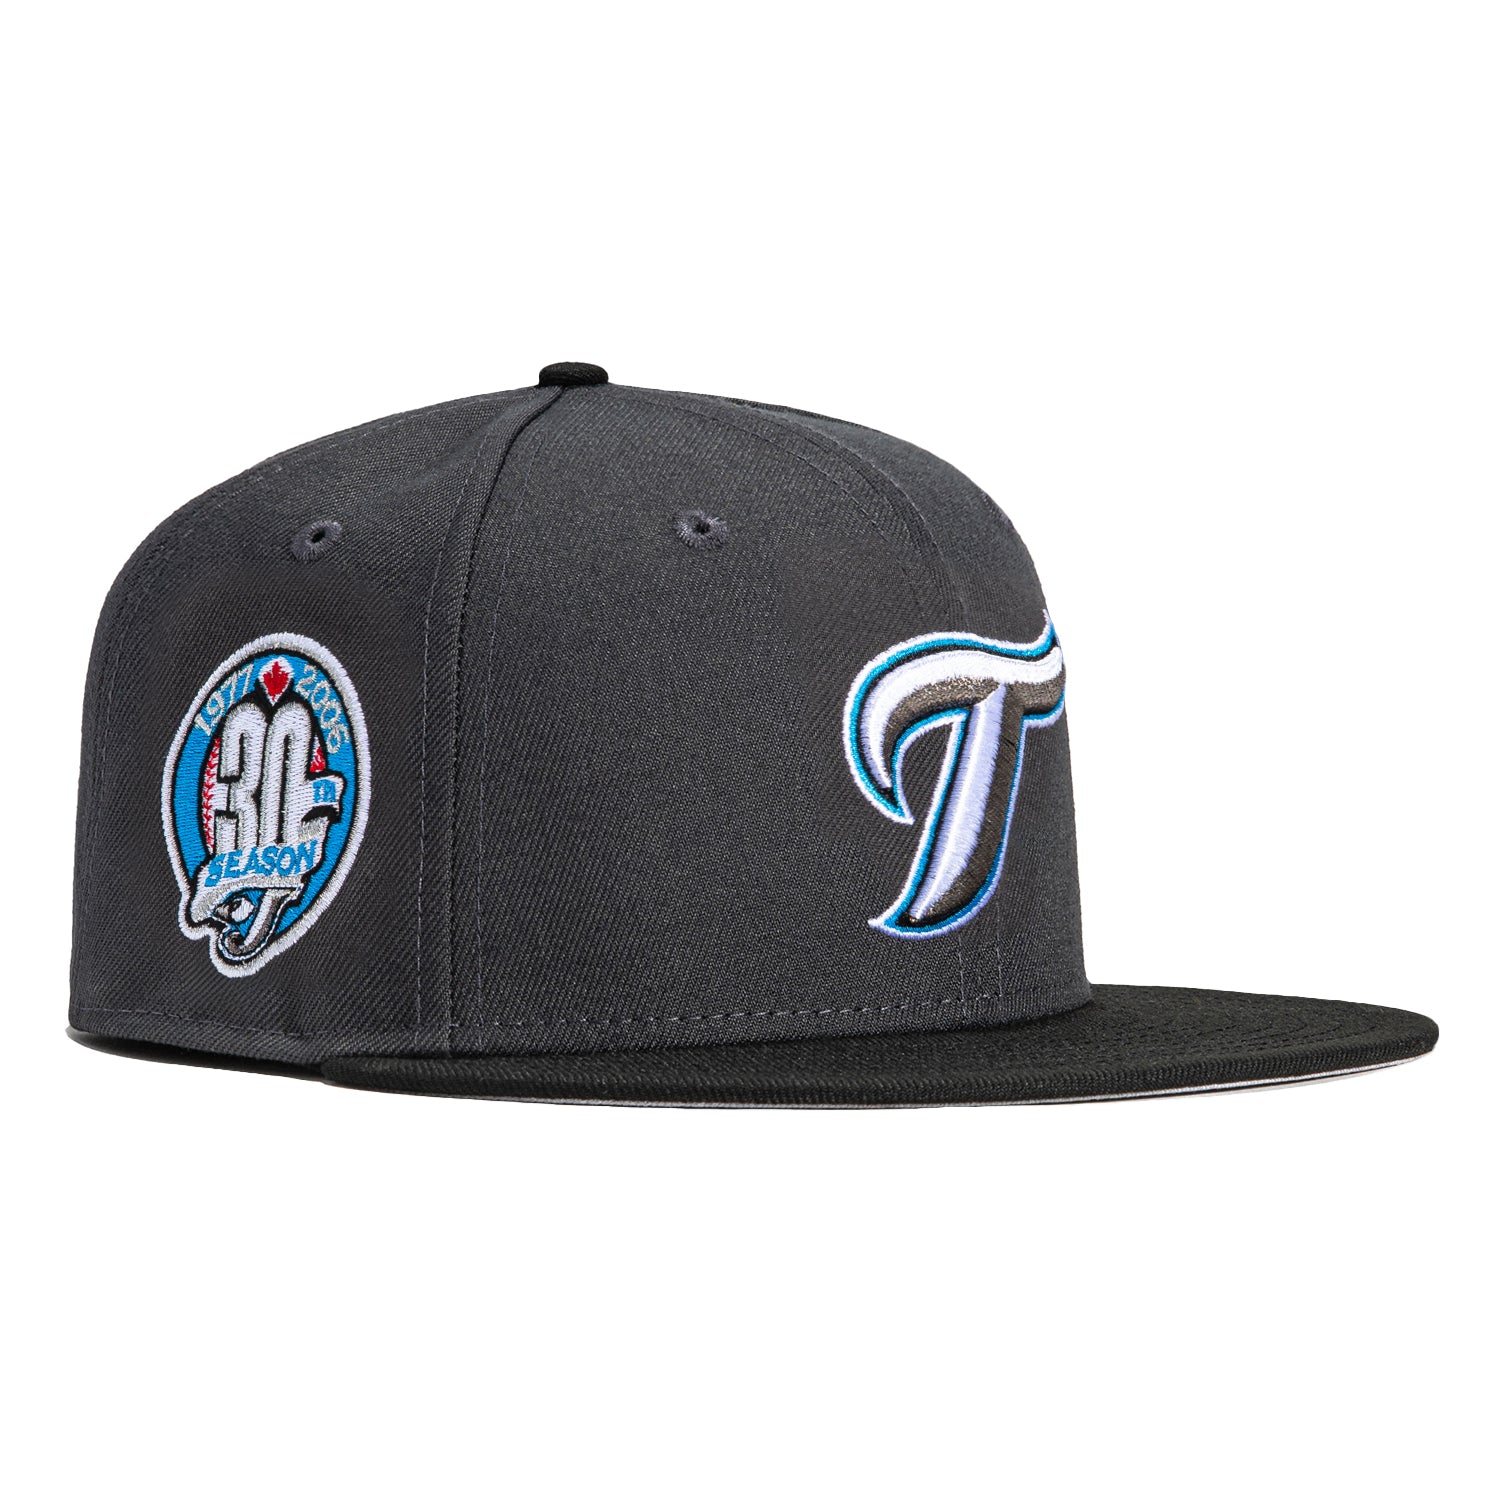 Toronto Blue Jays New Era 5950 Fitted Hat - Alt - Black